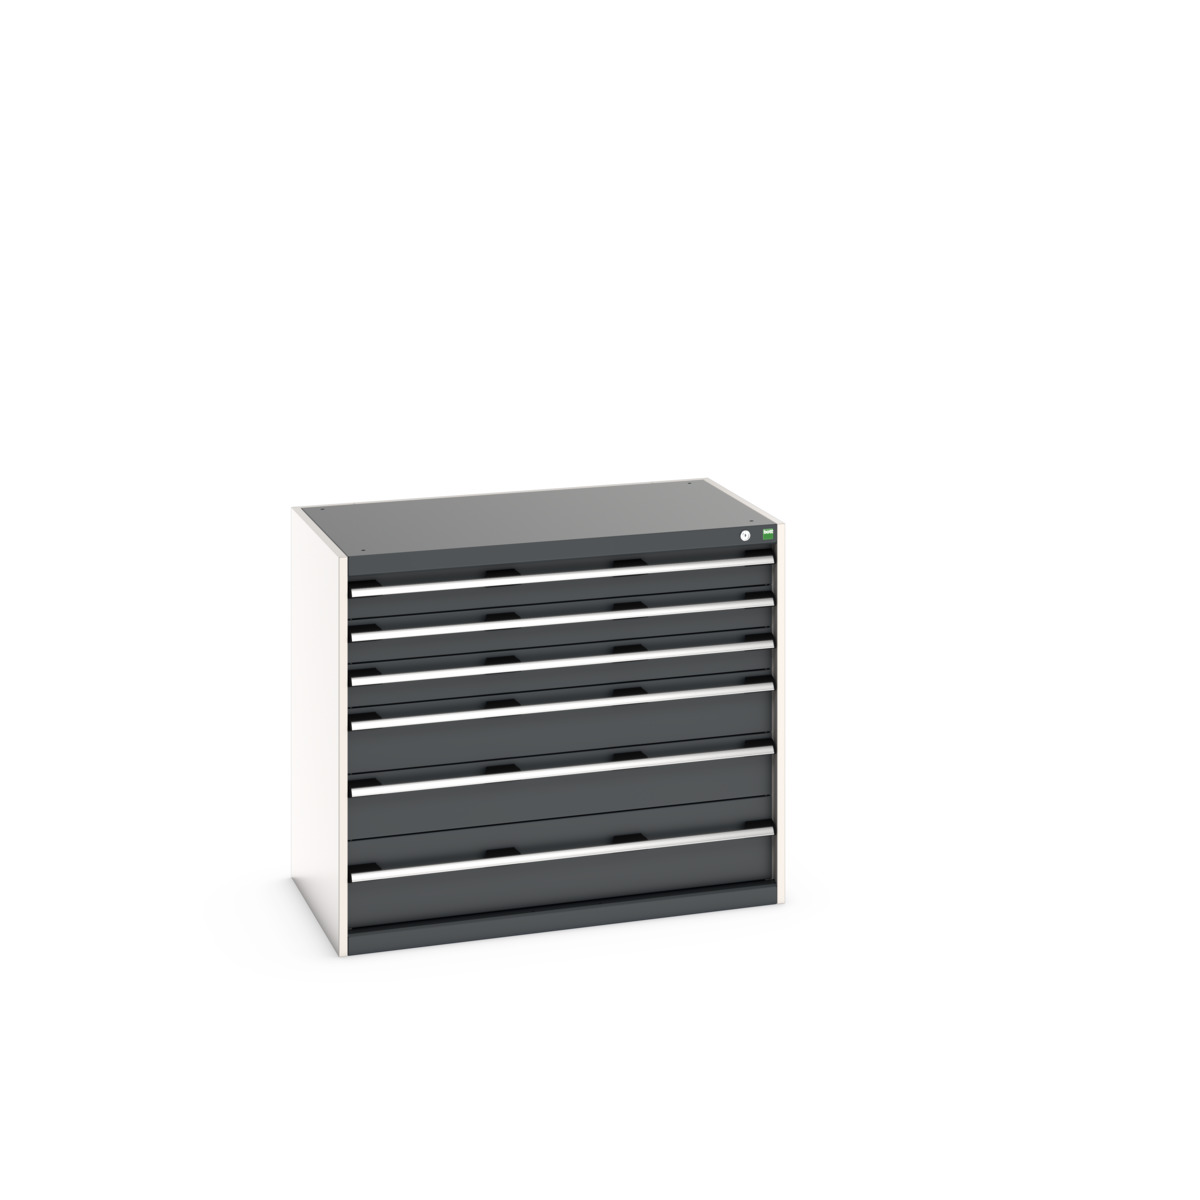 40021224. - cubio drawer cabinet